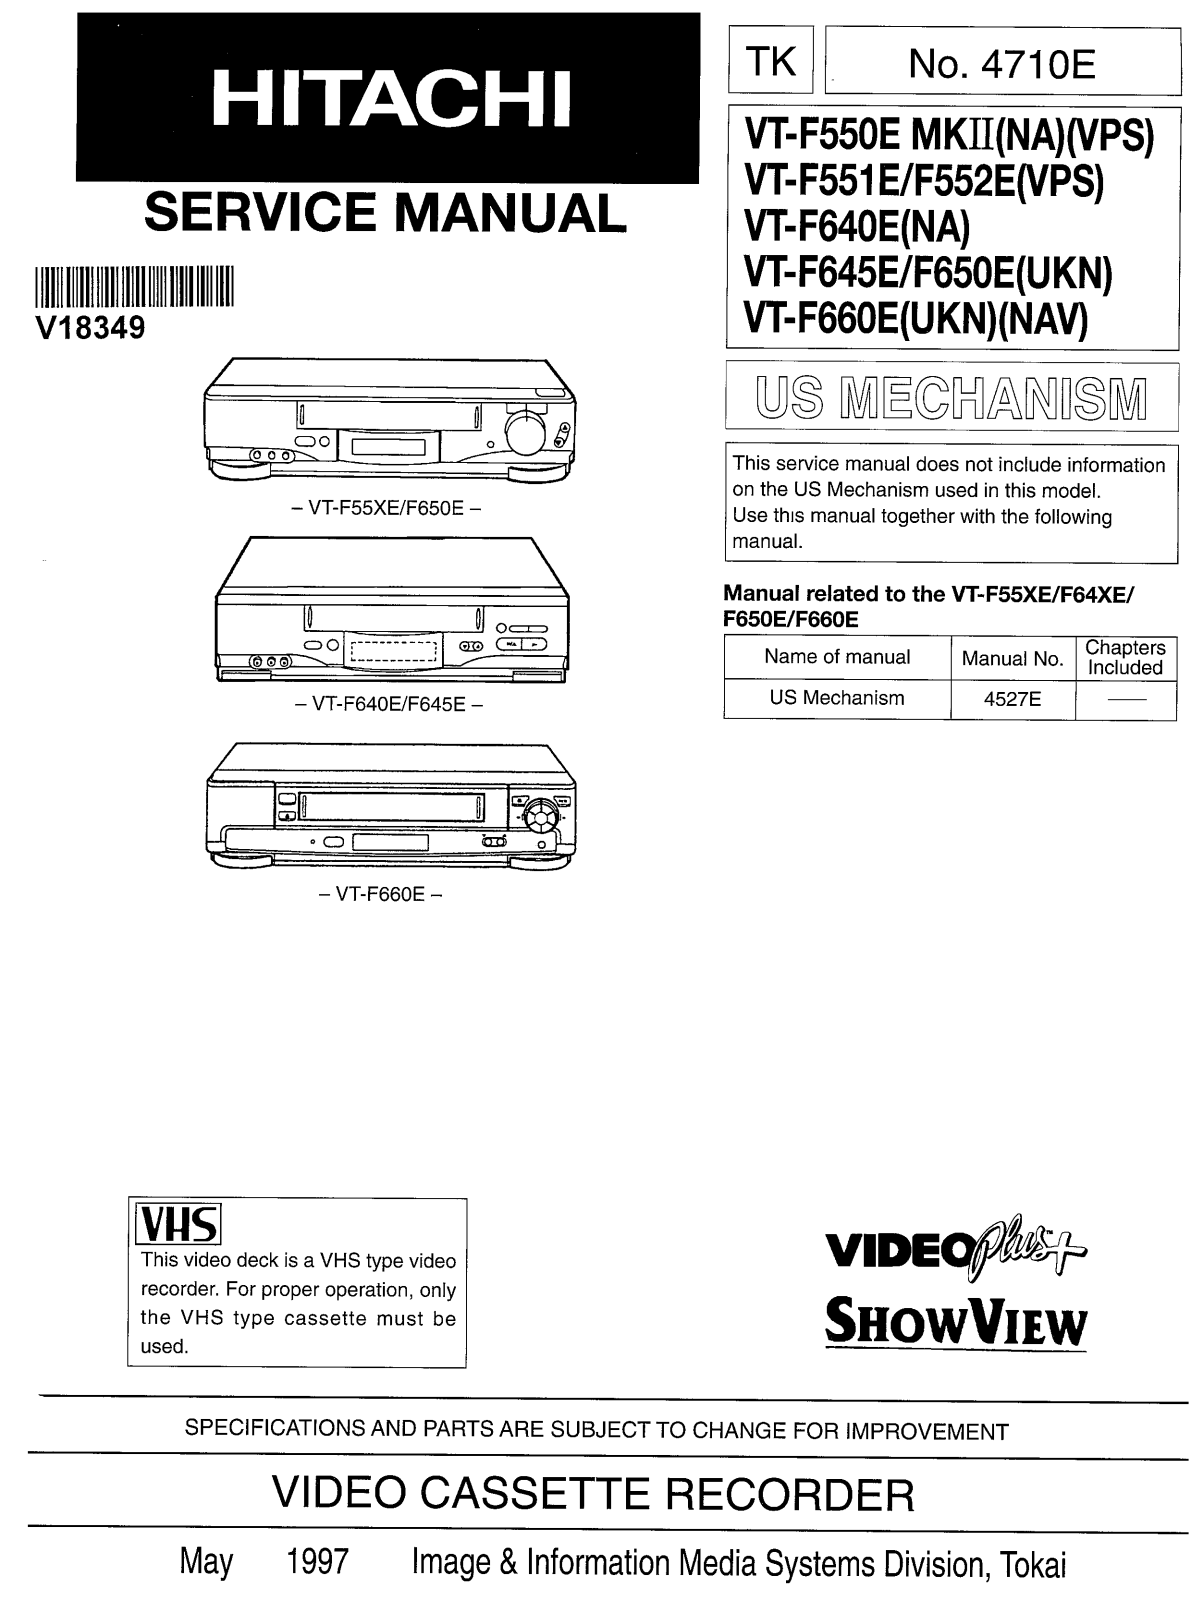 Hitachi VT-F550E MKII, VT-F660E, VT-F640E-NA, VT-F551 E, VT-F552E-VPS Service Manual